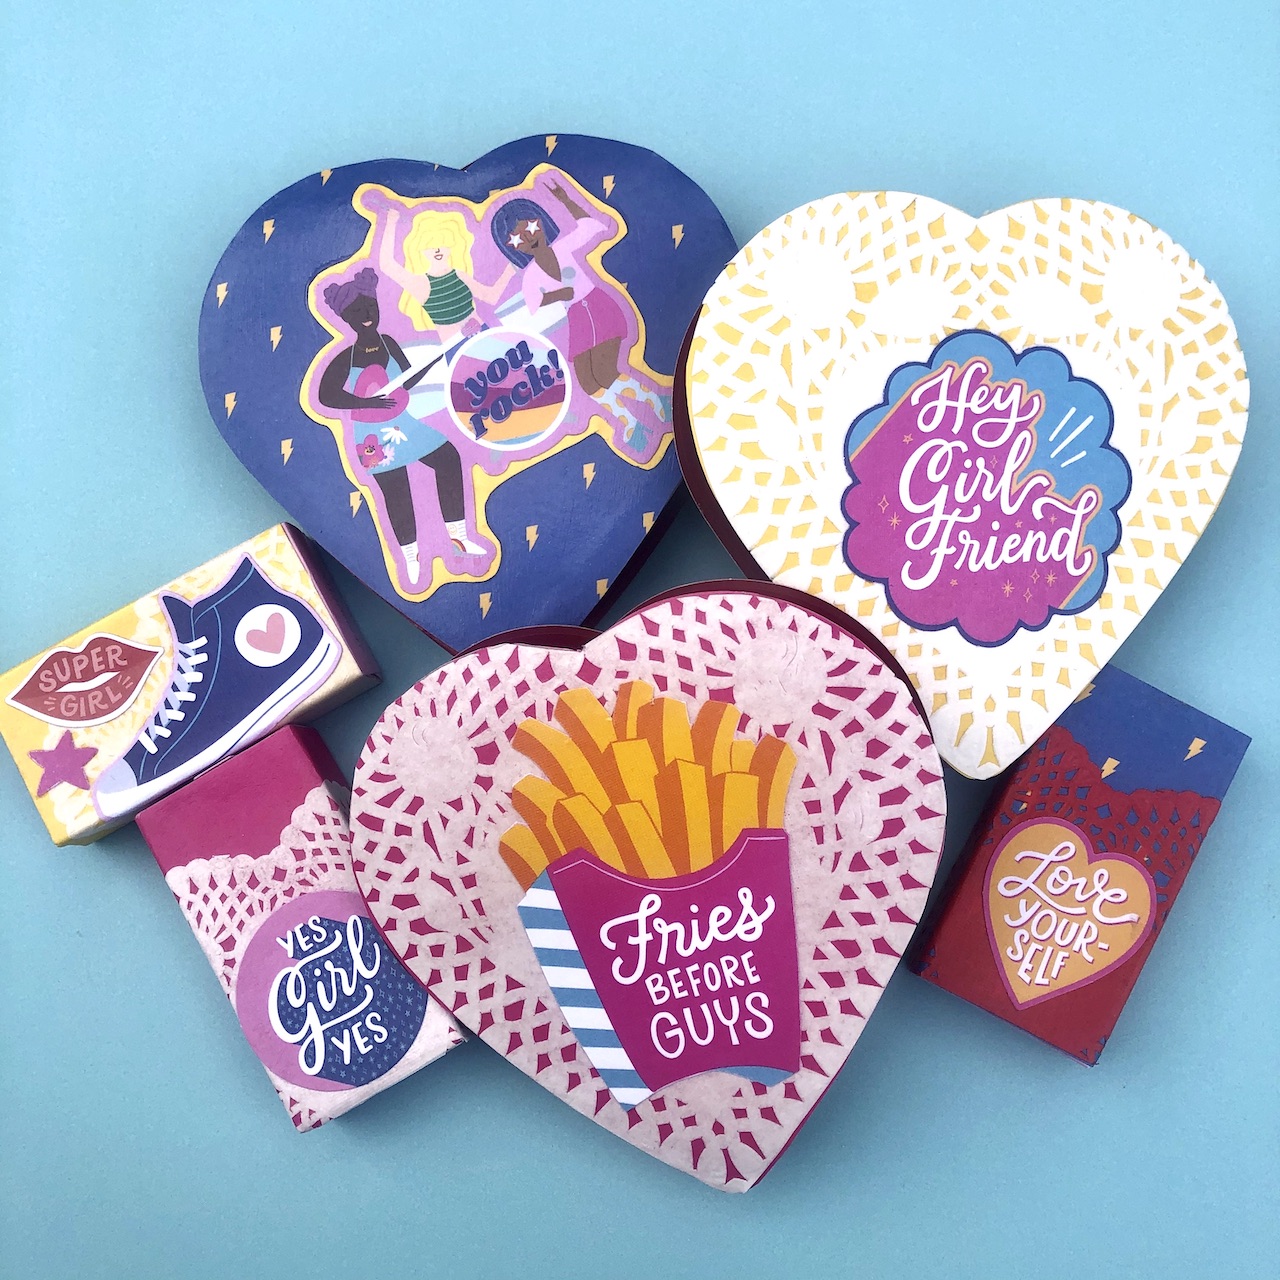 45+ Valentine Crafts for Adults You'll Love to Make! - Mod Podge Rocks